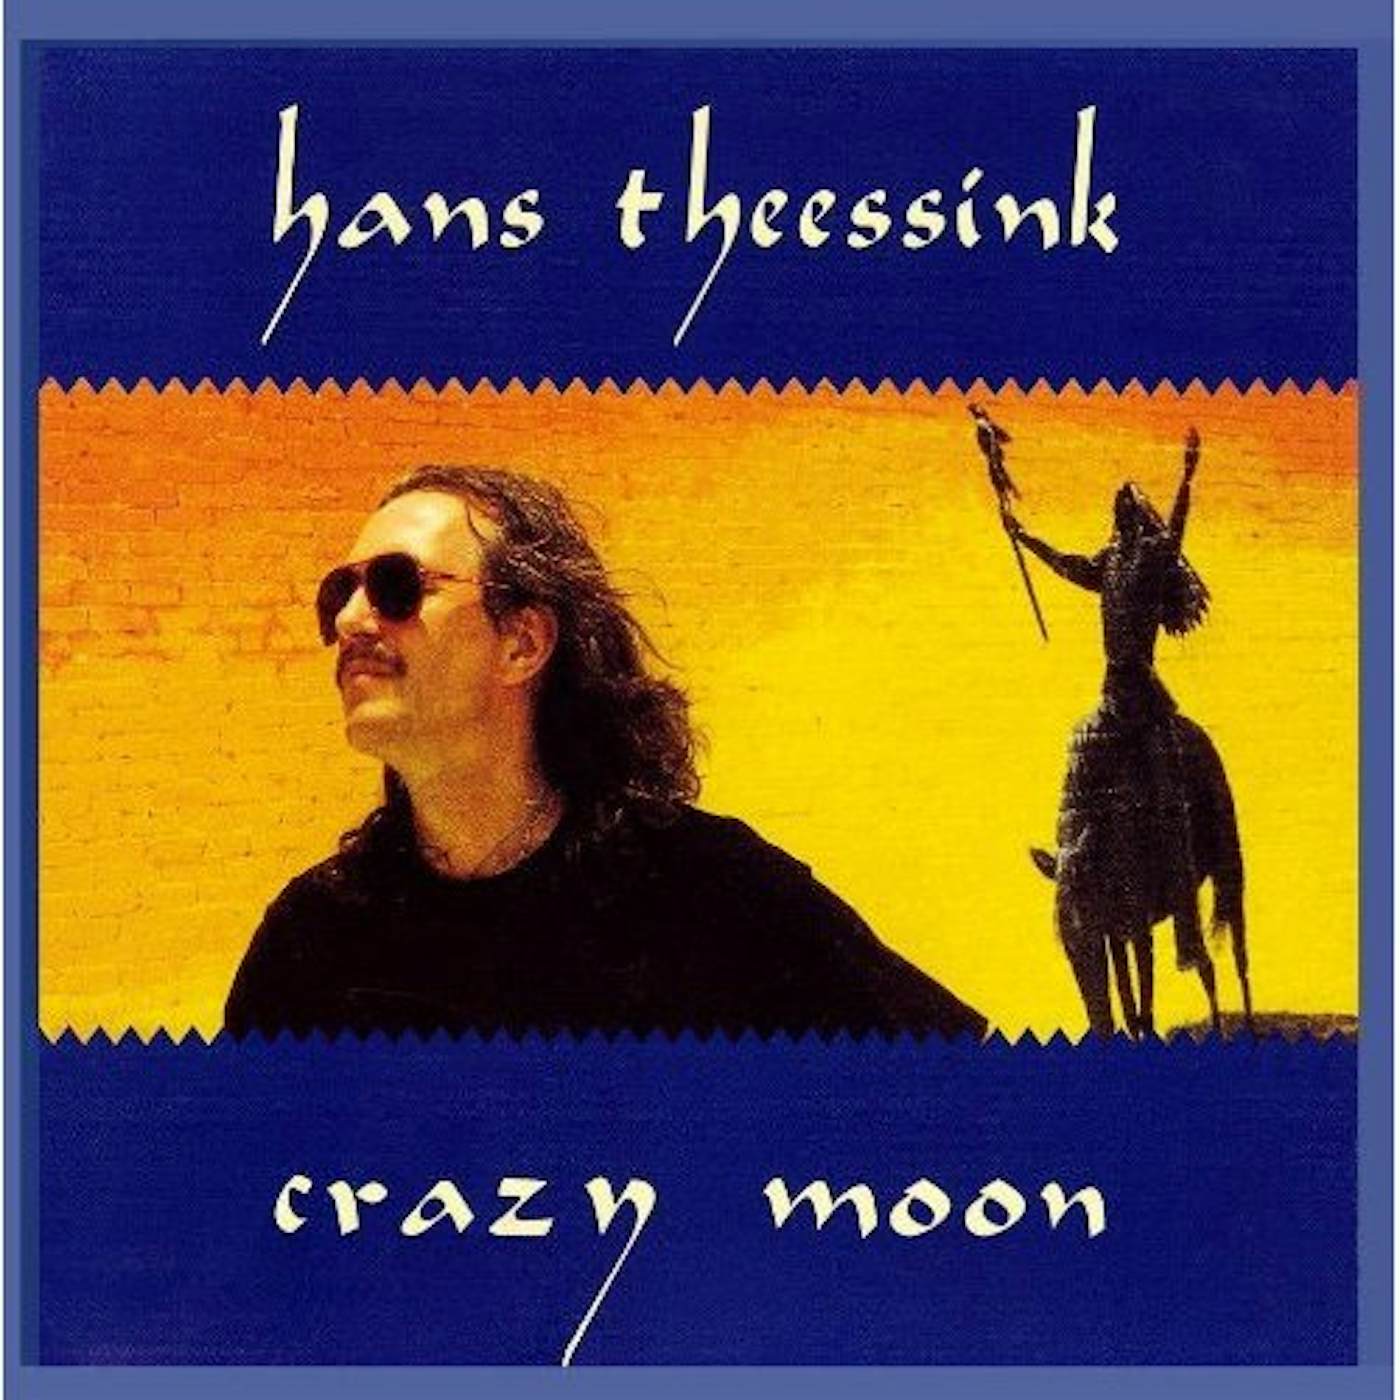 Hans Theessink CRAZY MOON CD